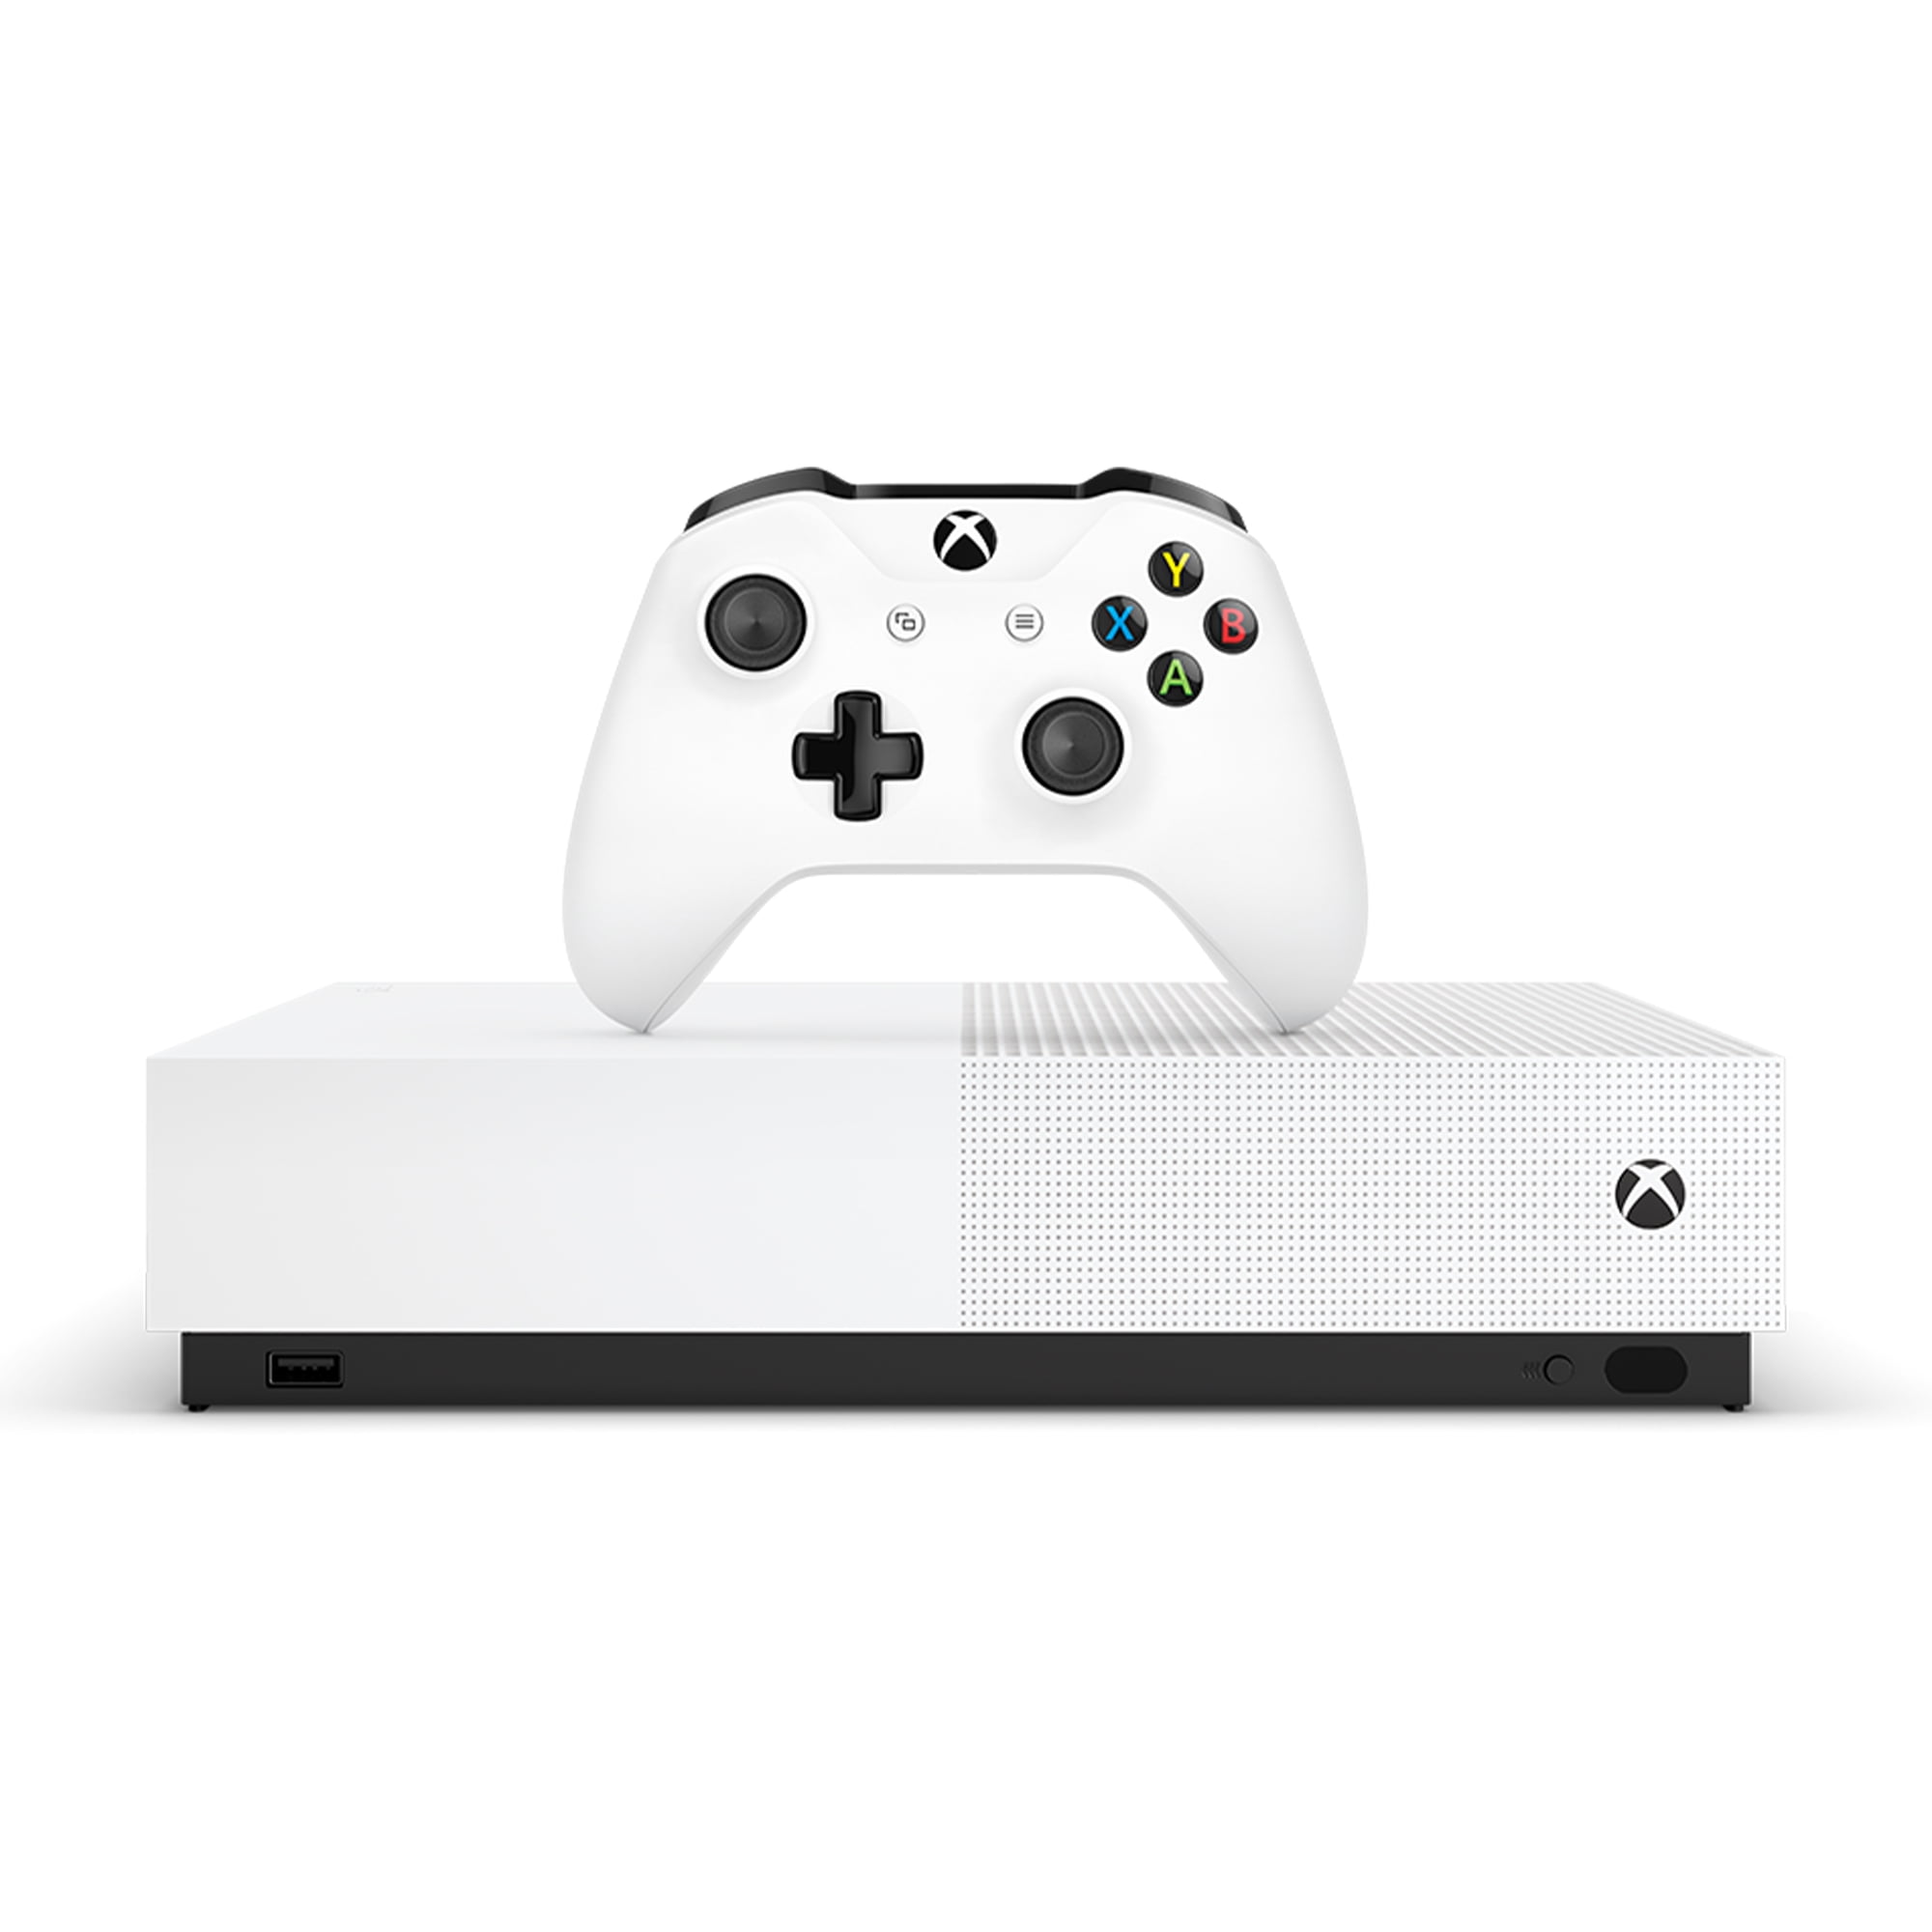 eenvoudig Ezel Temmen Microsoft Xbox One S 1TB All-Digital Edition Console (Disc-free Gaming),  White, NJP-00024 - Walmart.com